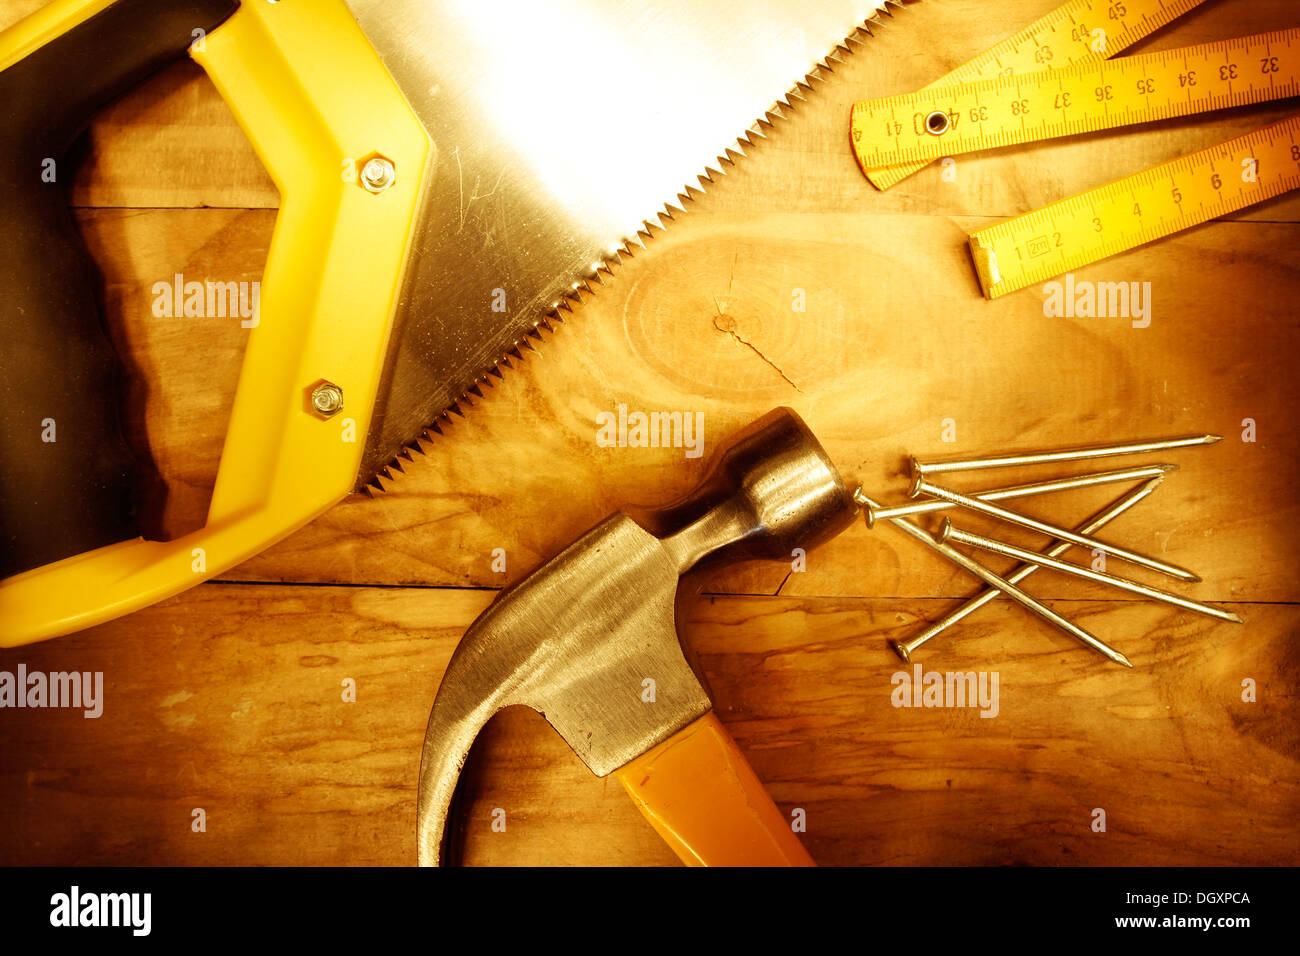 Hammer, Nägel, Lineal und Säge auf Holz Stockfoto